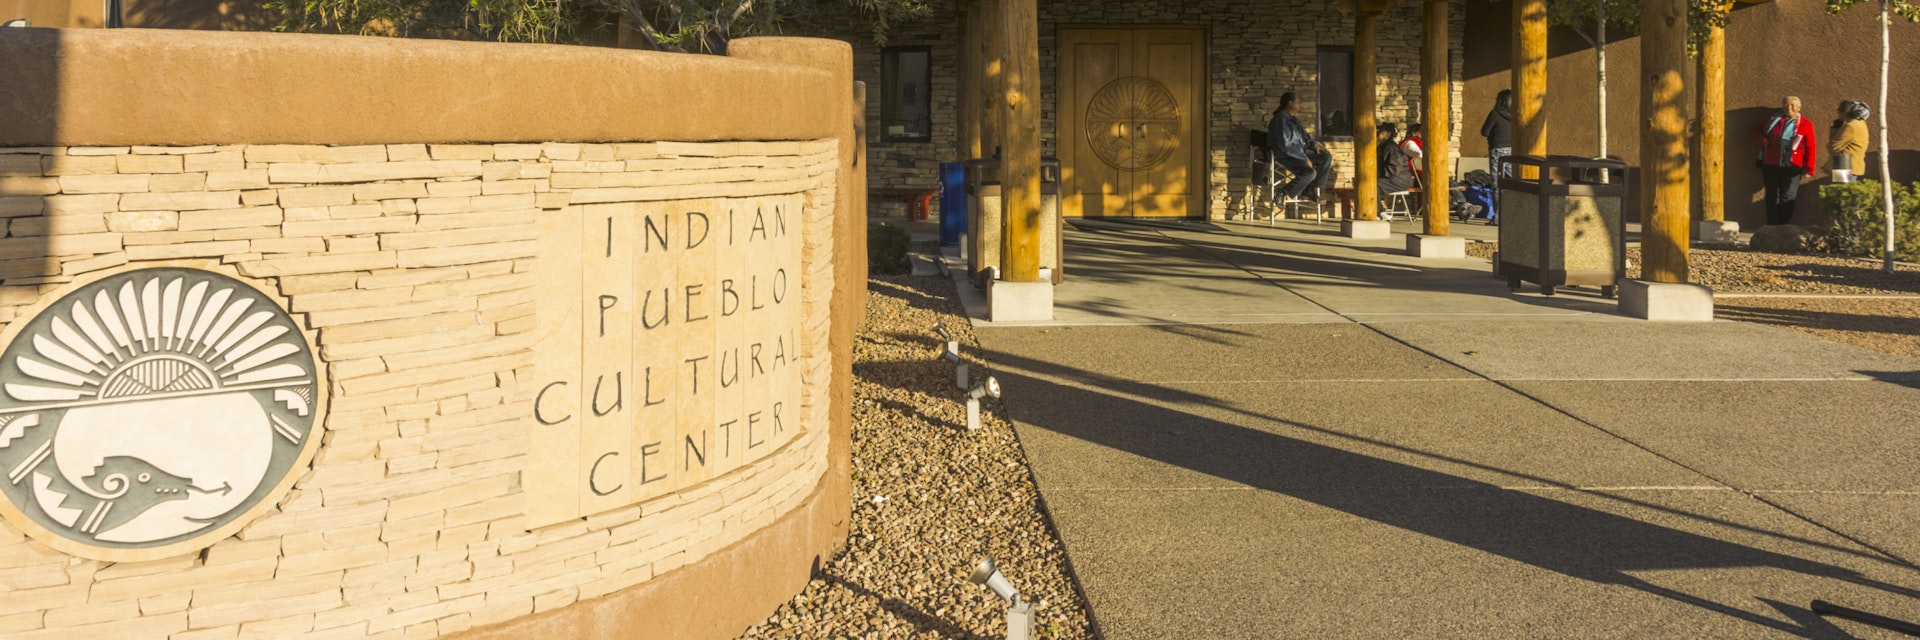 New Mexico, Albuquerque, Indian Pueblo Cultural Center